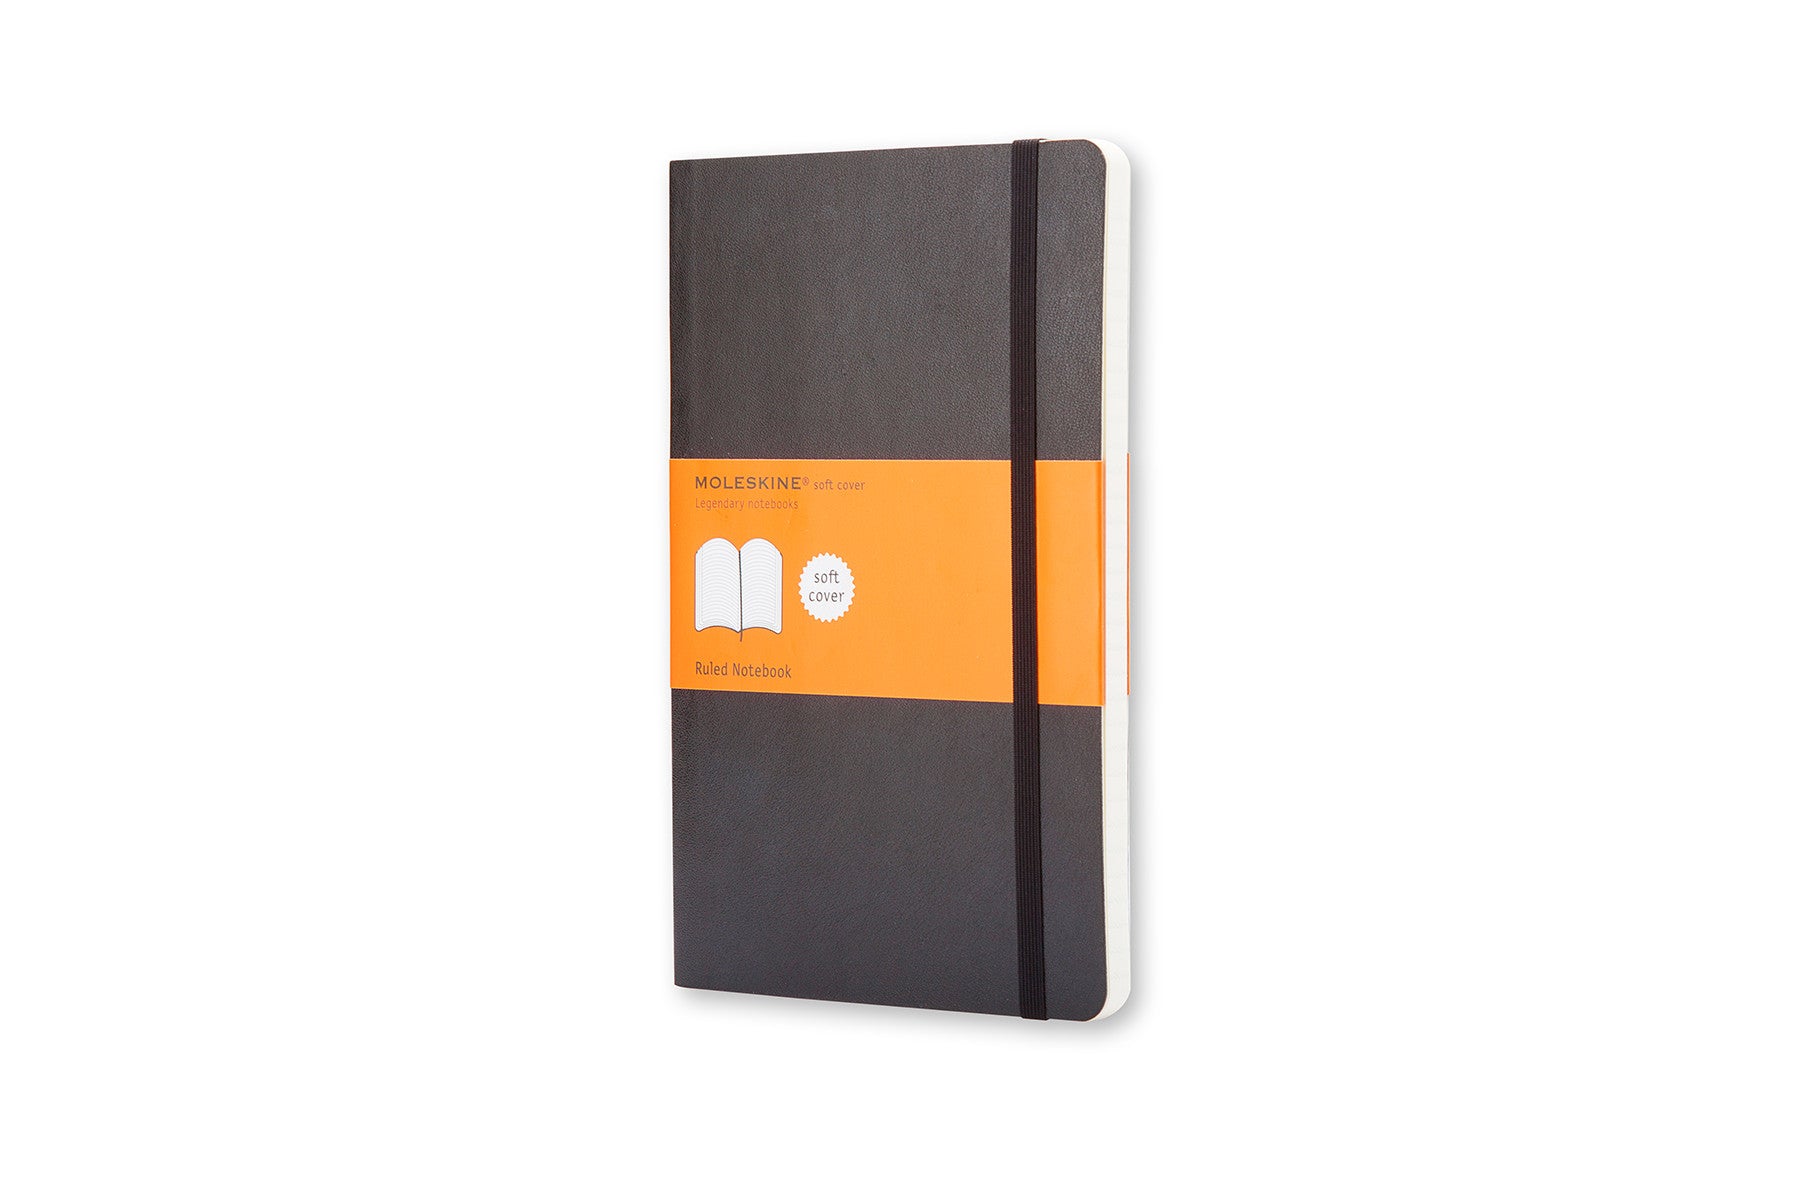 Moleskine notebook softcover pocket lined black